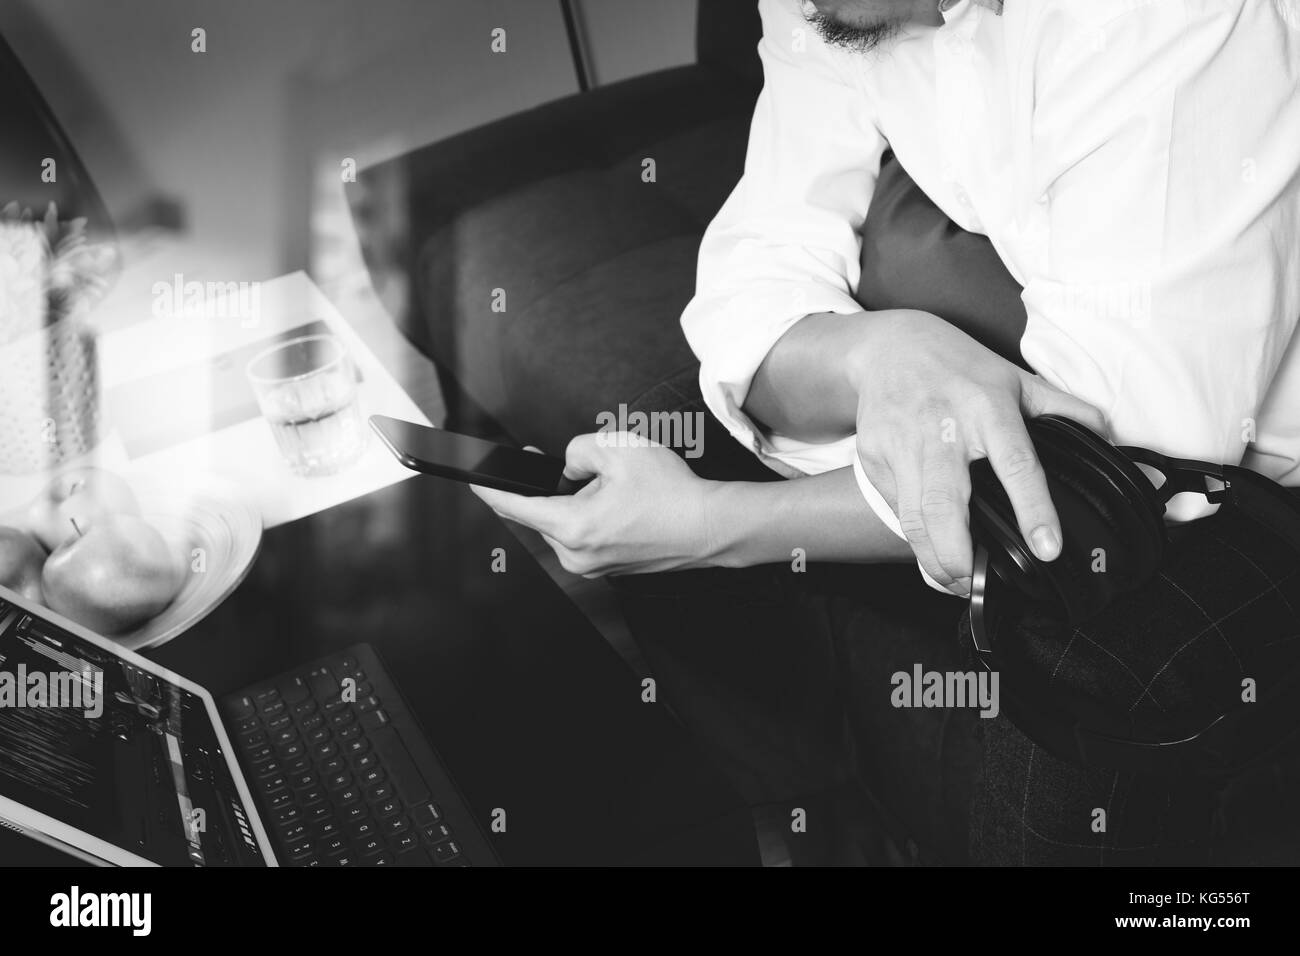 Hipster hand holding digital tablet,casque clavier d' et les entreprises en ligne, les paiements mobiles omni channel,sitting on sofa in living room,g Banque D'Images